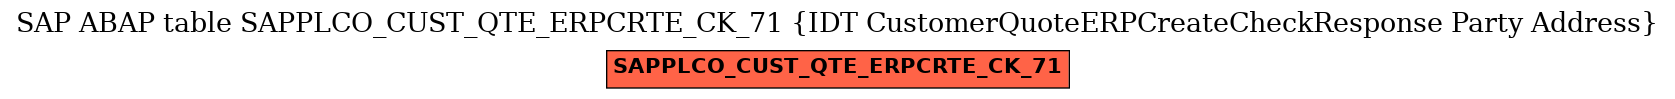 E-R Diagram for table SAPPLCO_CUST_QTE_ERPCRTE_CK_71 (IDT CustomerQuoteERPCreateCheckResponse Party Address)